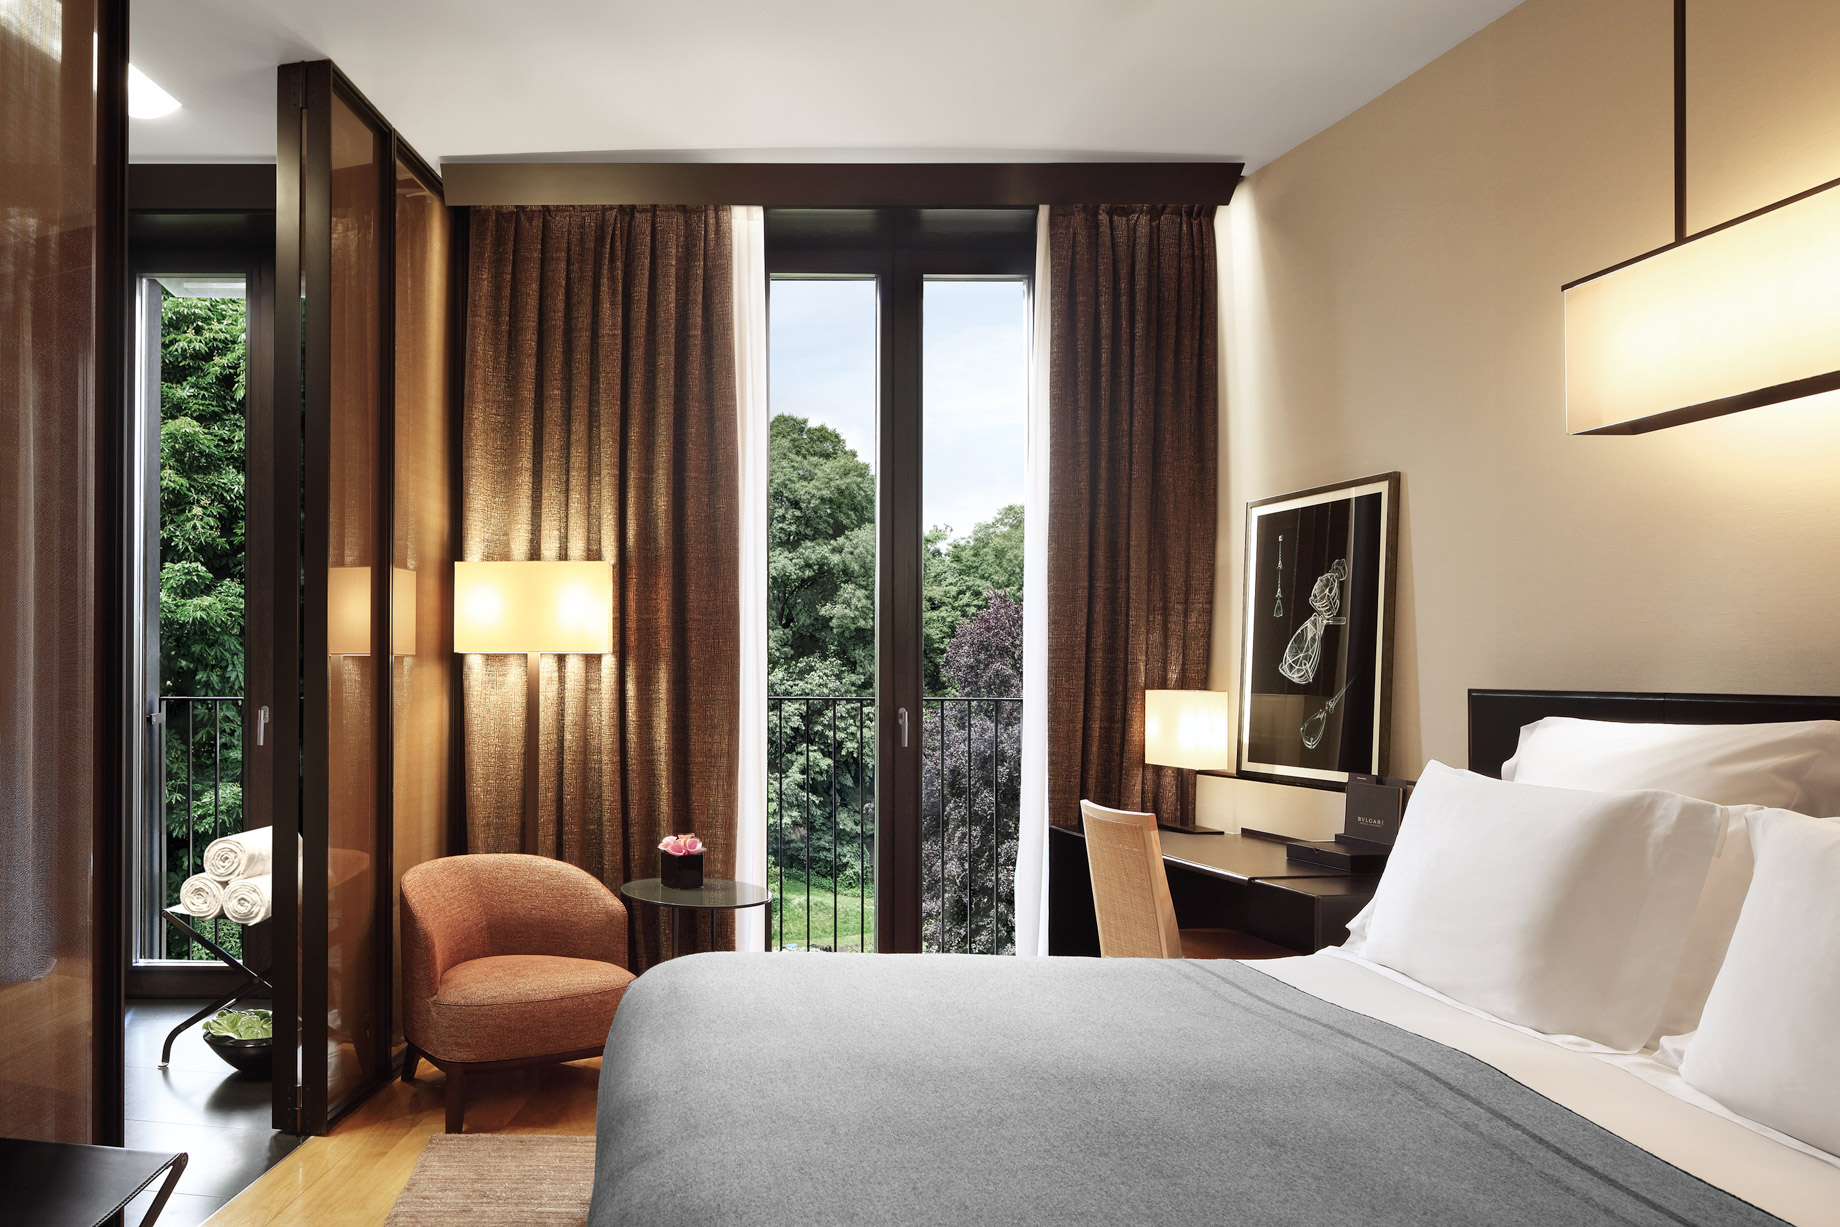 Bvlgari Hotel Milano - Milan, Italy - Premium Room Bedroom